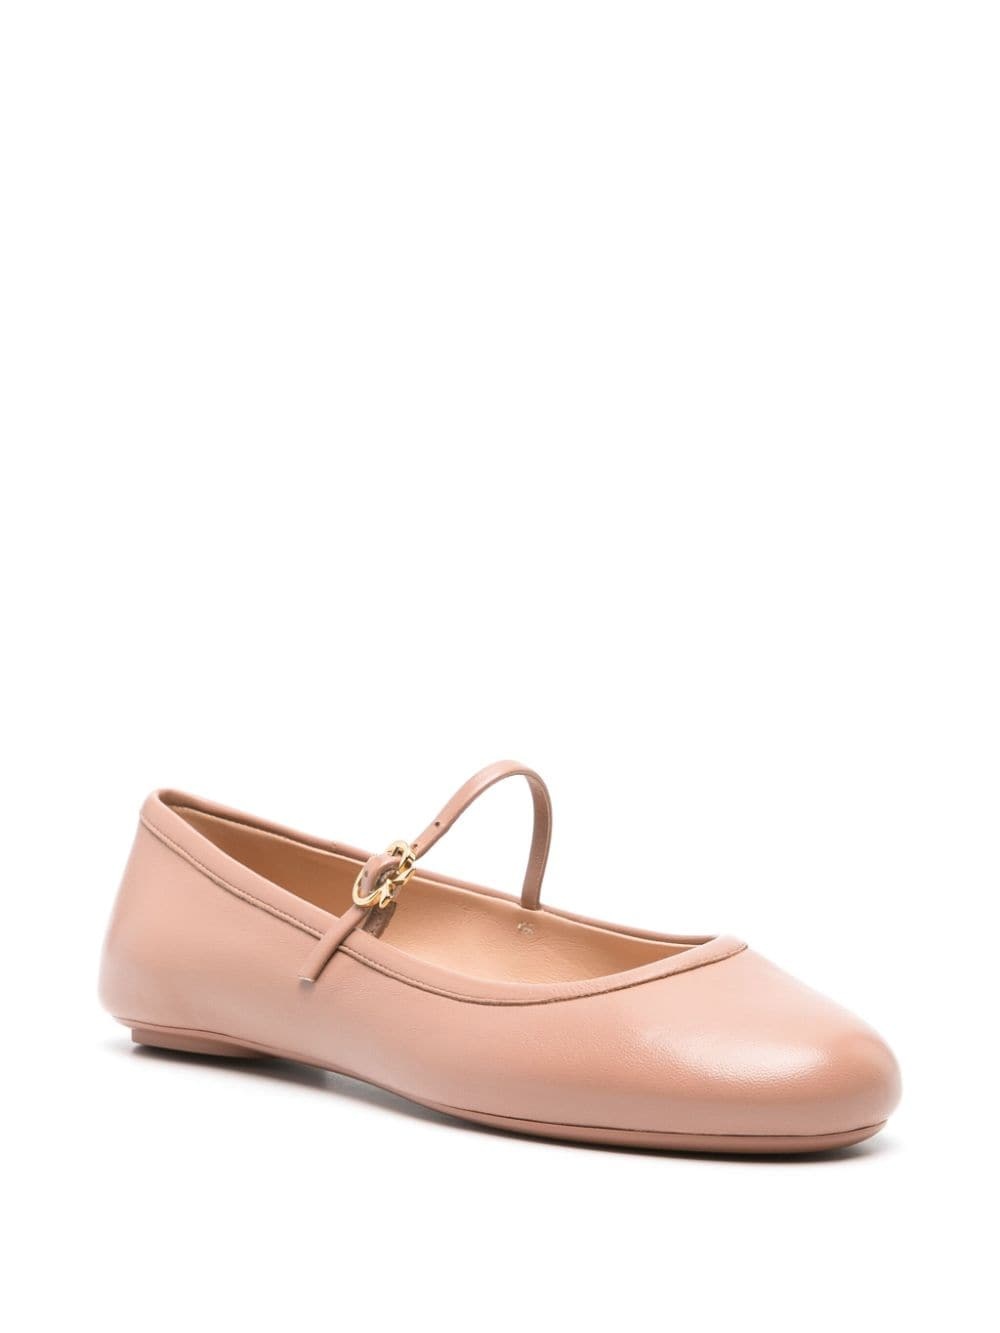 Carla leather ballet flats - 2